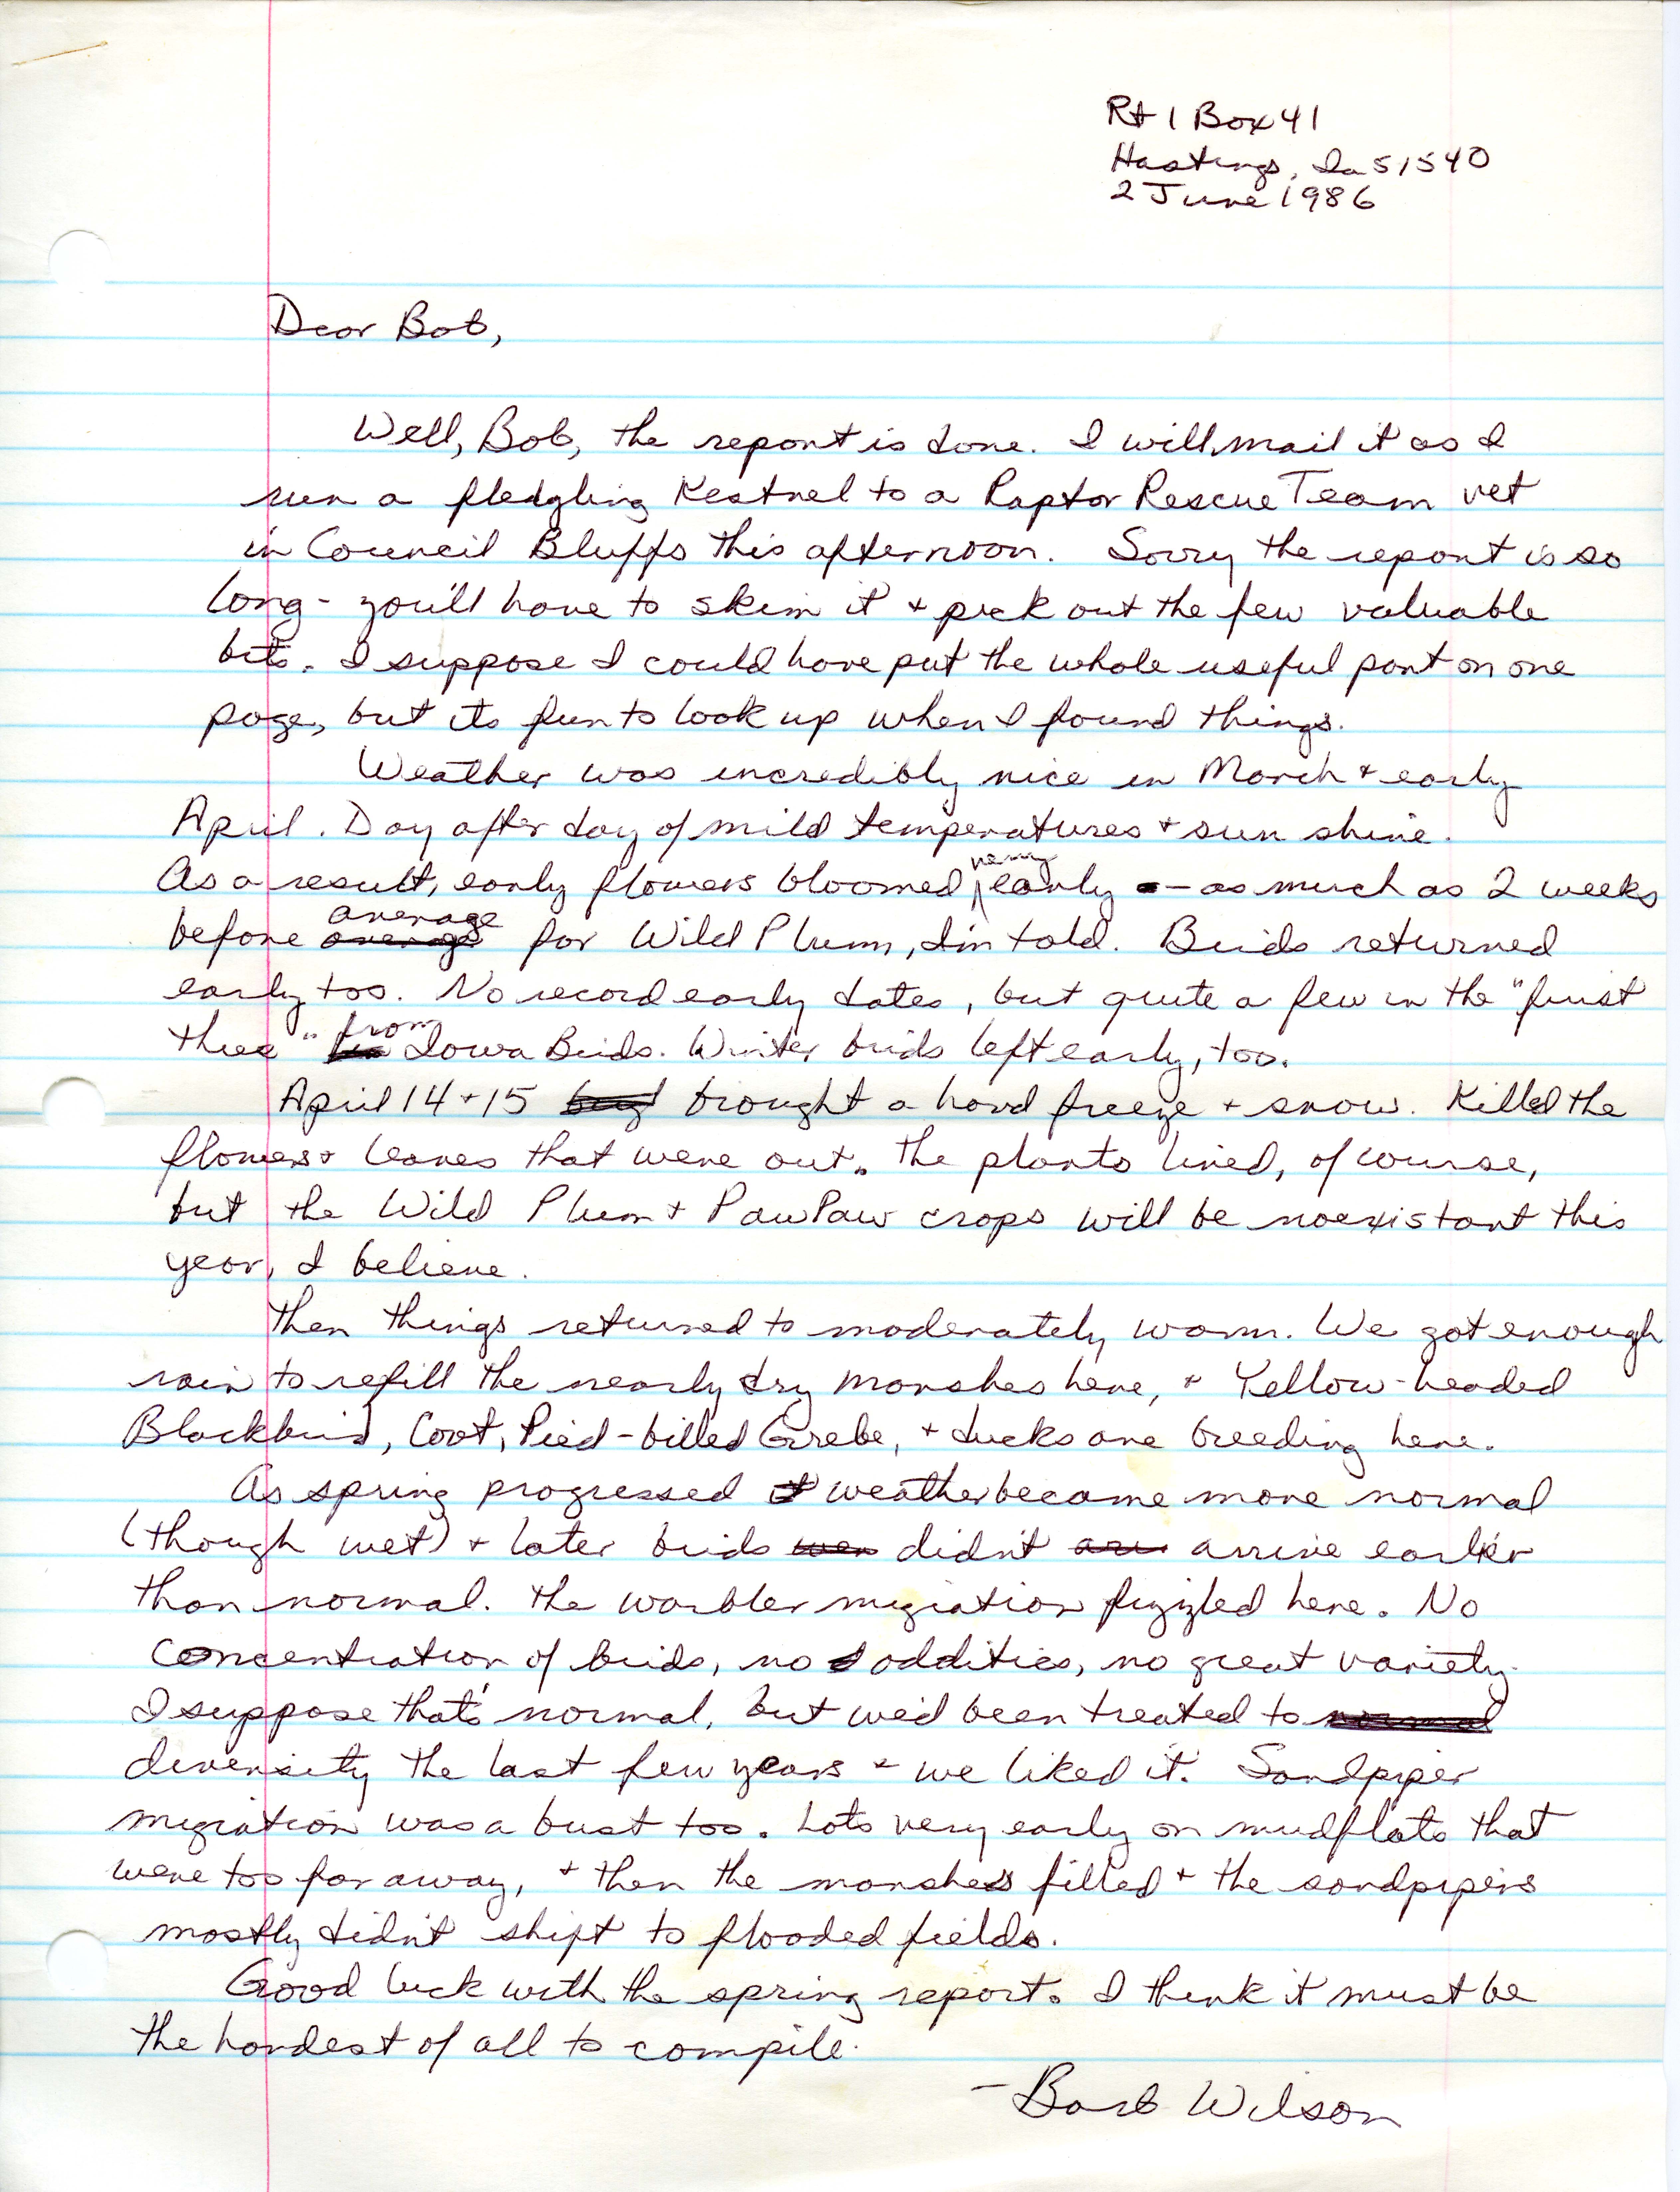 Barb Wilson letter to Robert Myers regarding Spring report, June 2, 1986